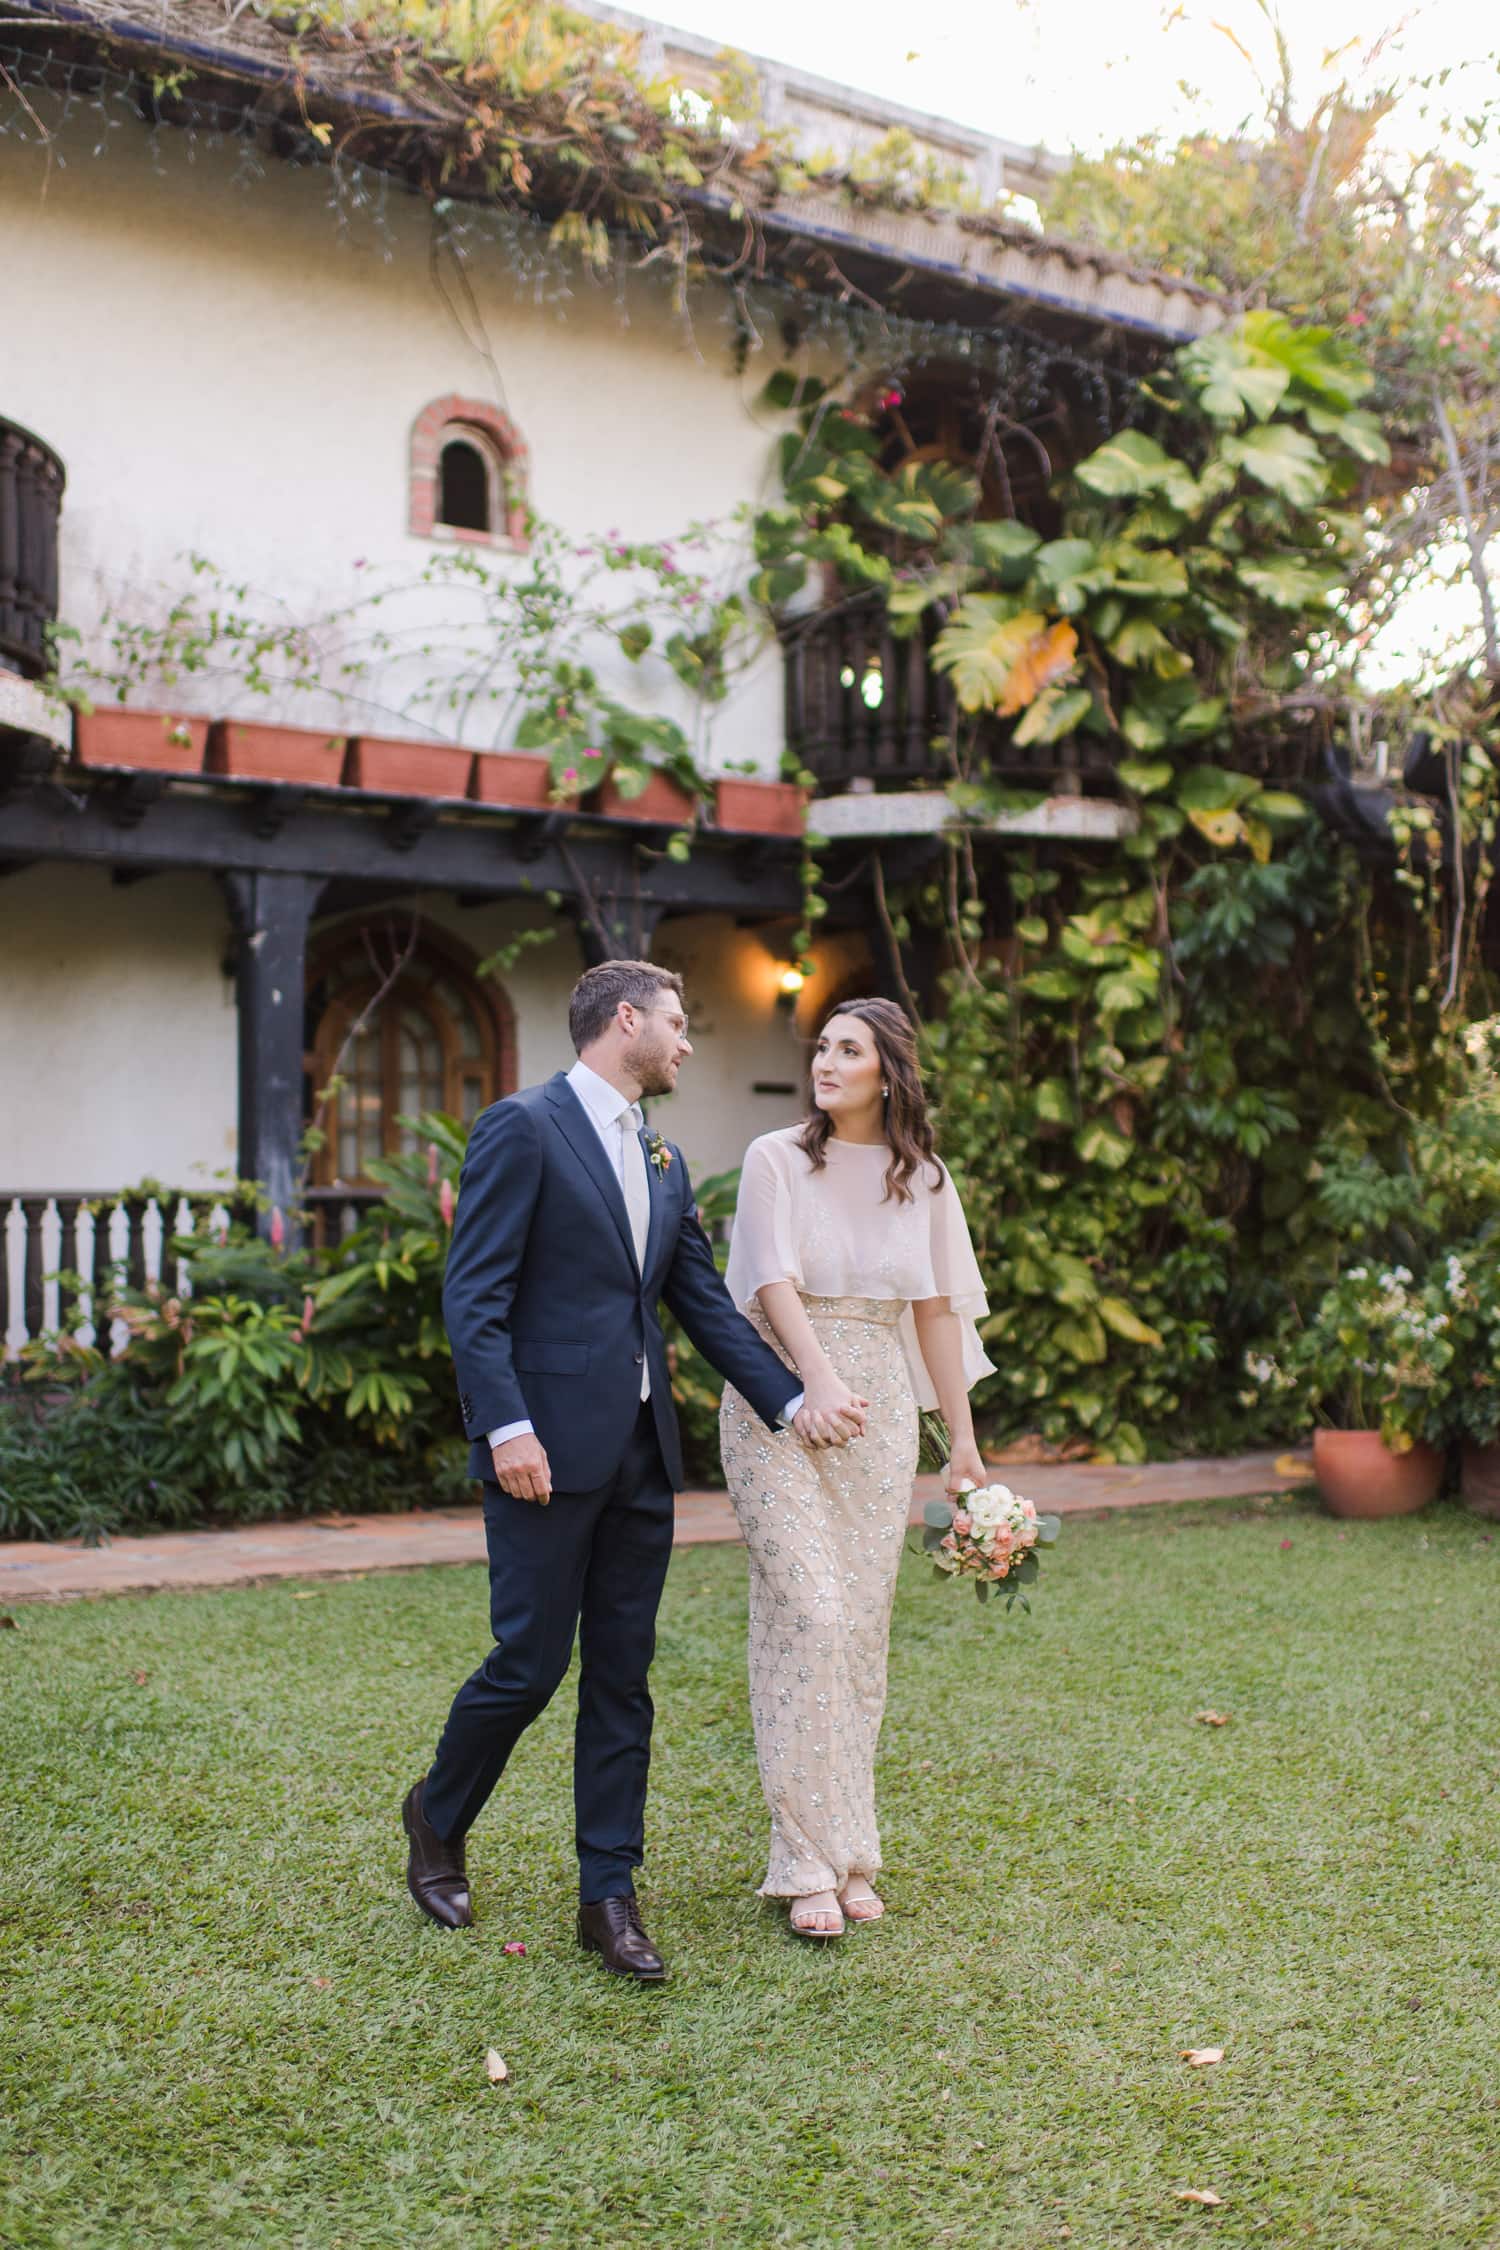 hacienda-siesta-alegre-photos-intimate-relaxed-candid-micro-wedding-photography-puerto-rico-050.jpg